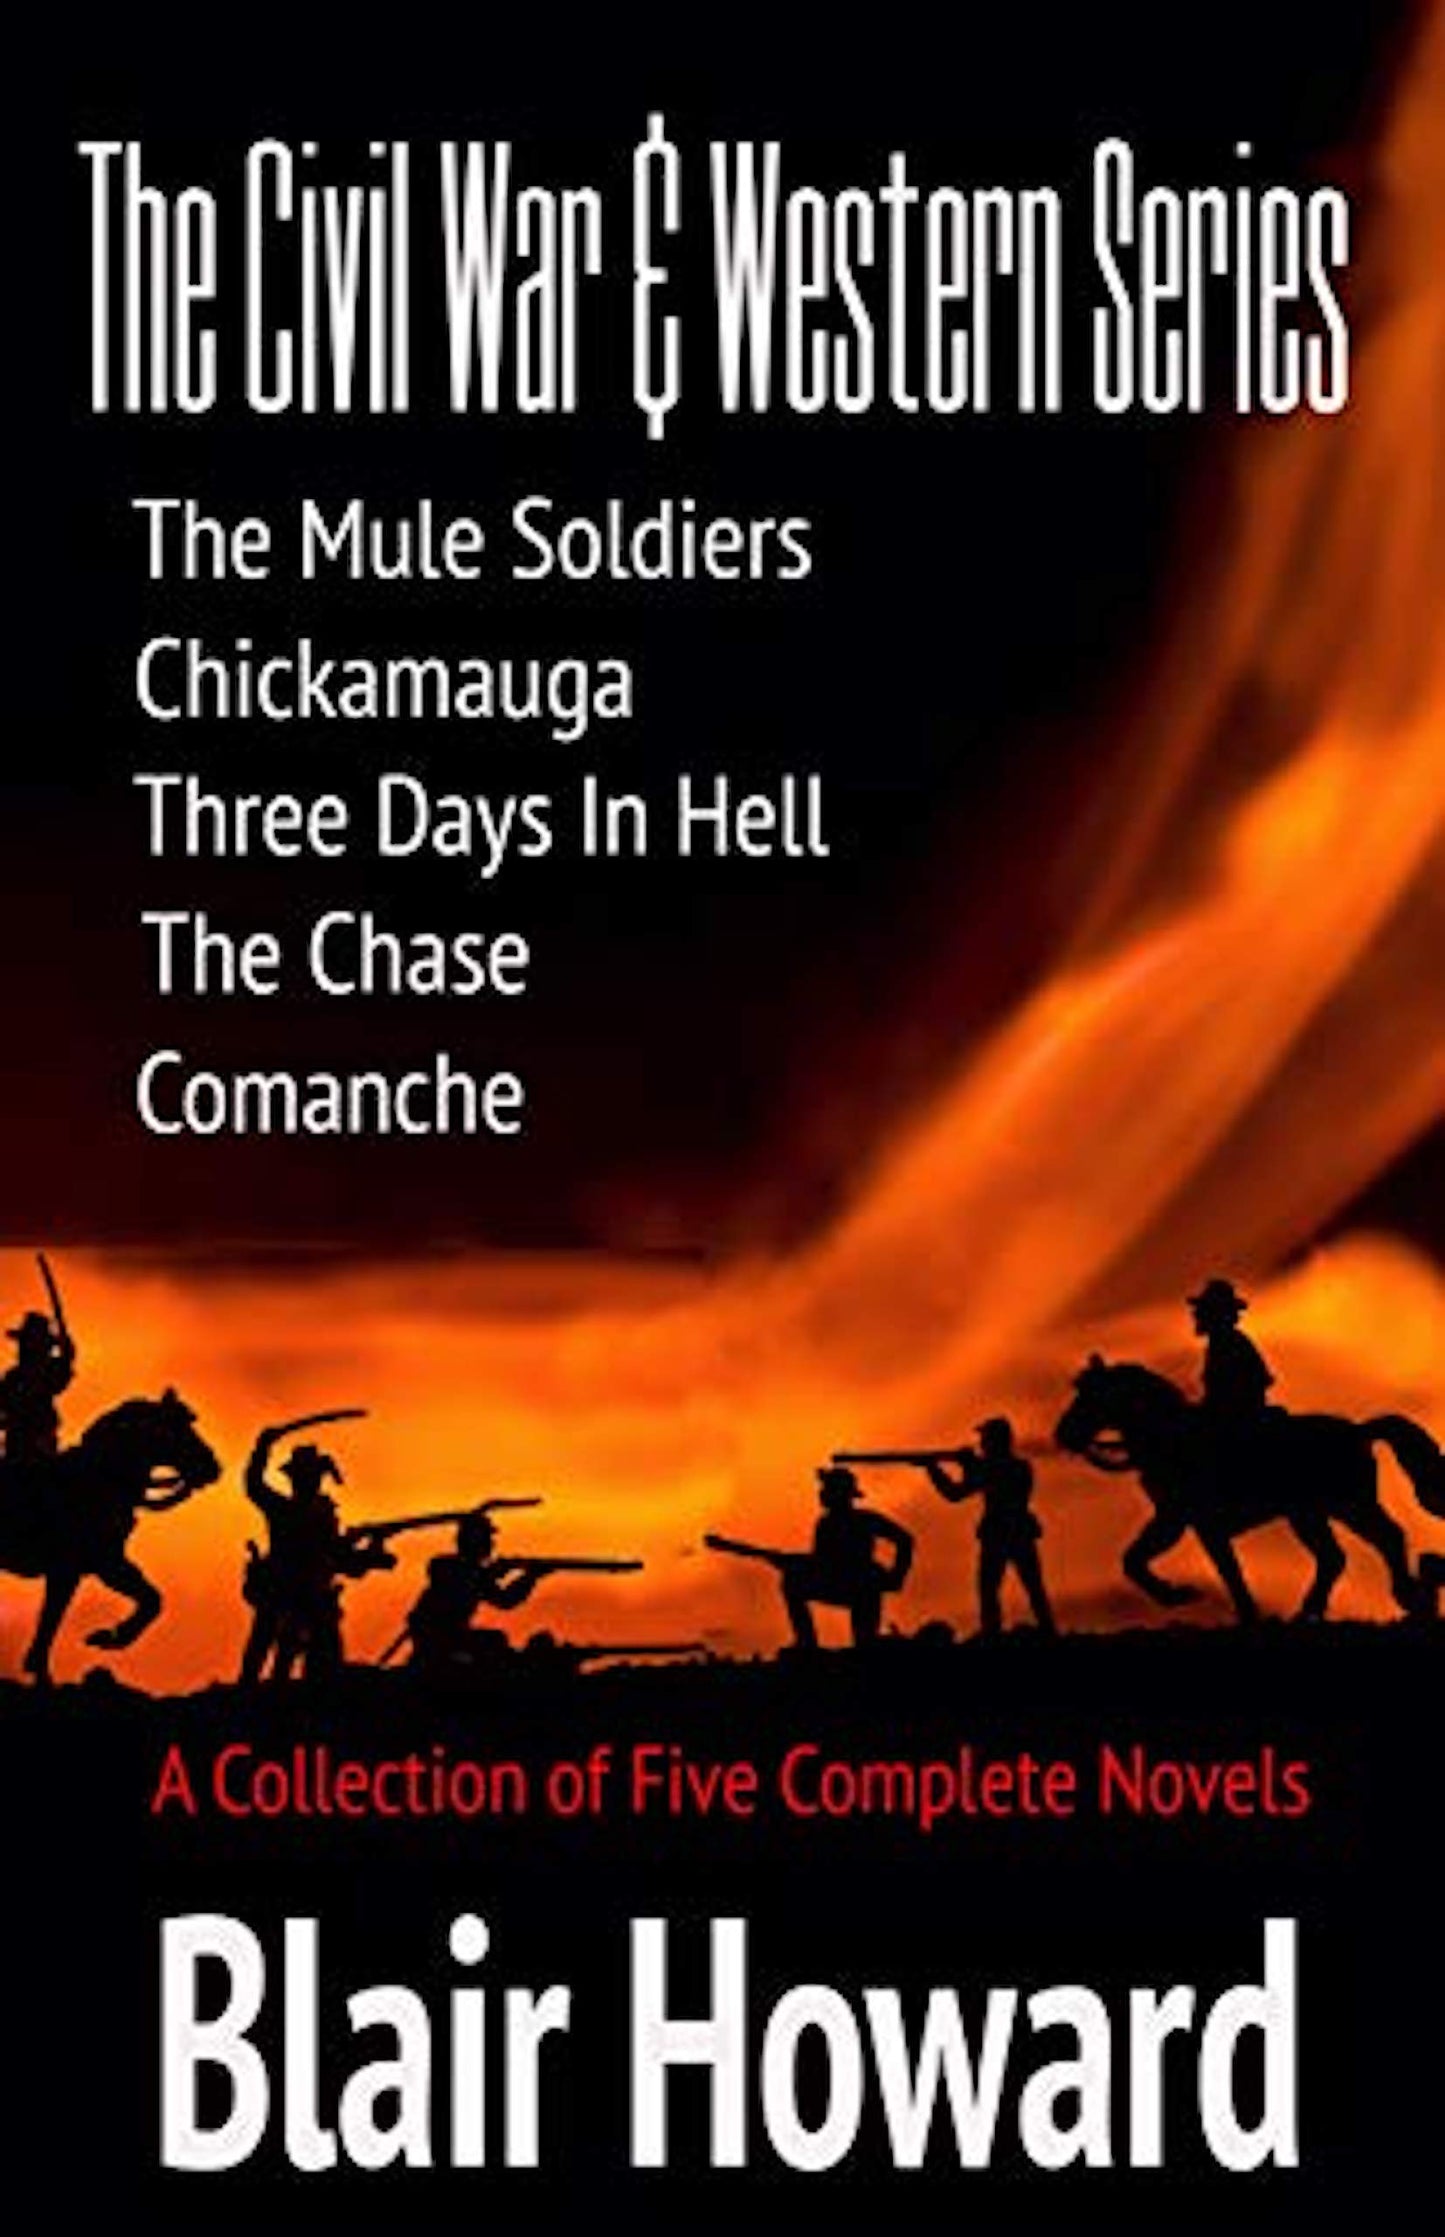 The Civil War & Western Series eBook